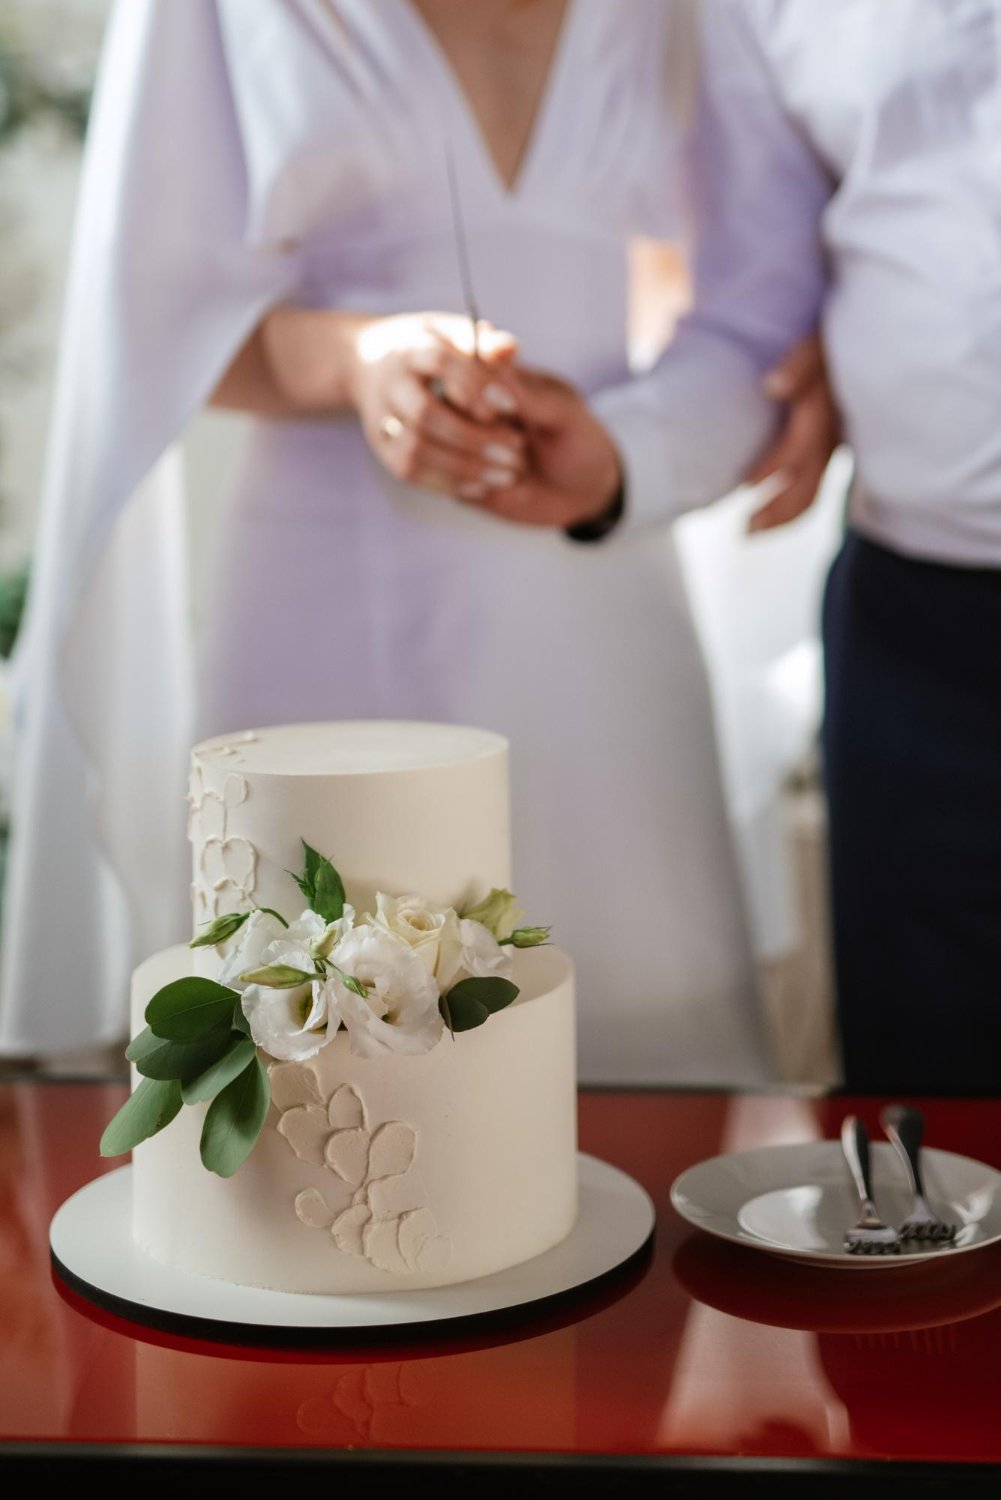  newlyweds happily cut and taste the wedding cake